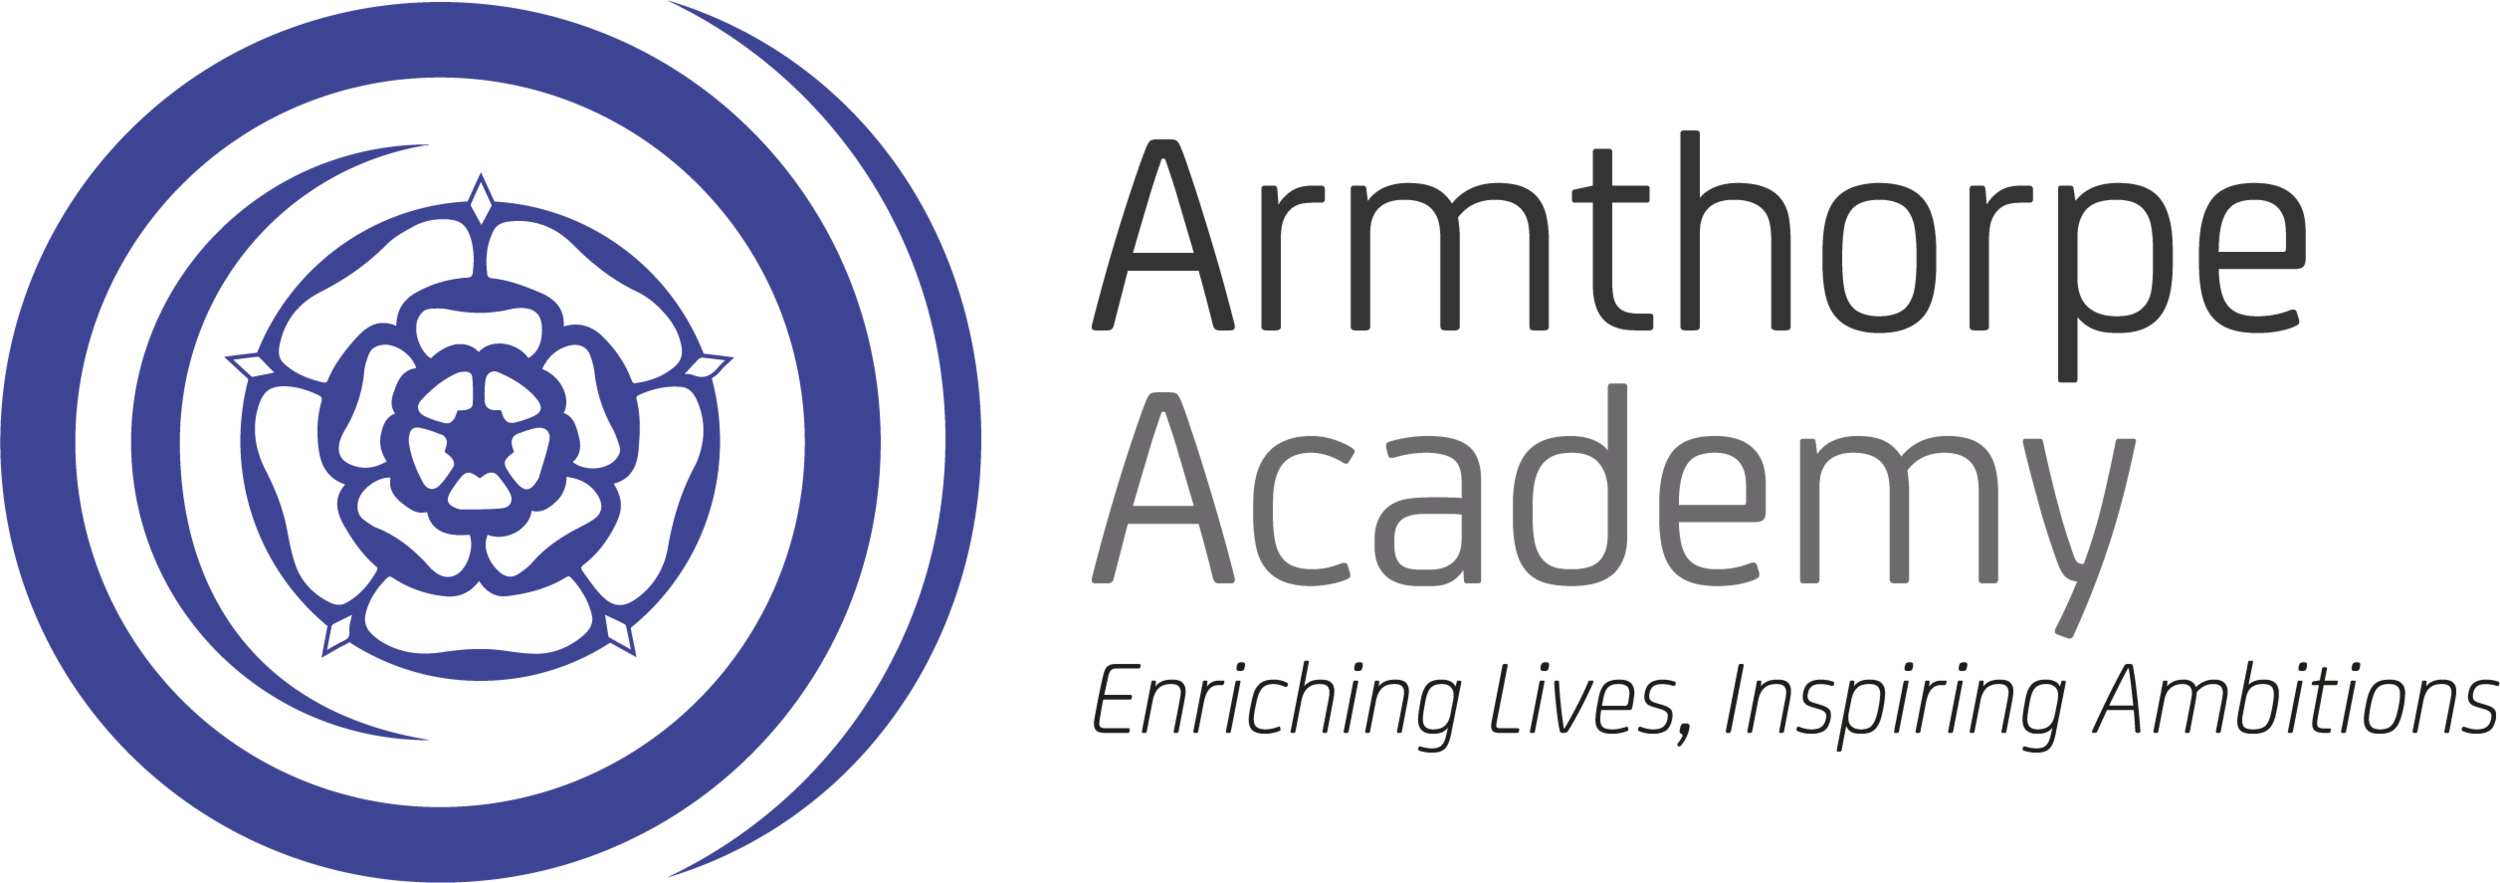 Armthorpe Academy校徽